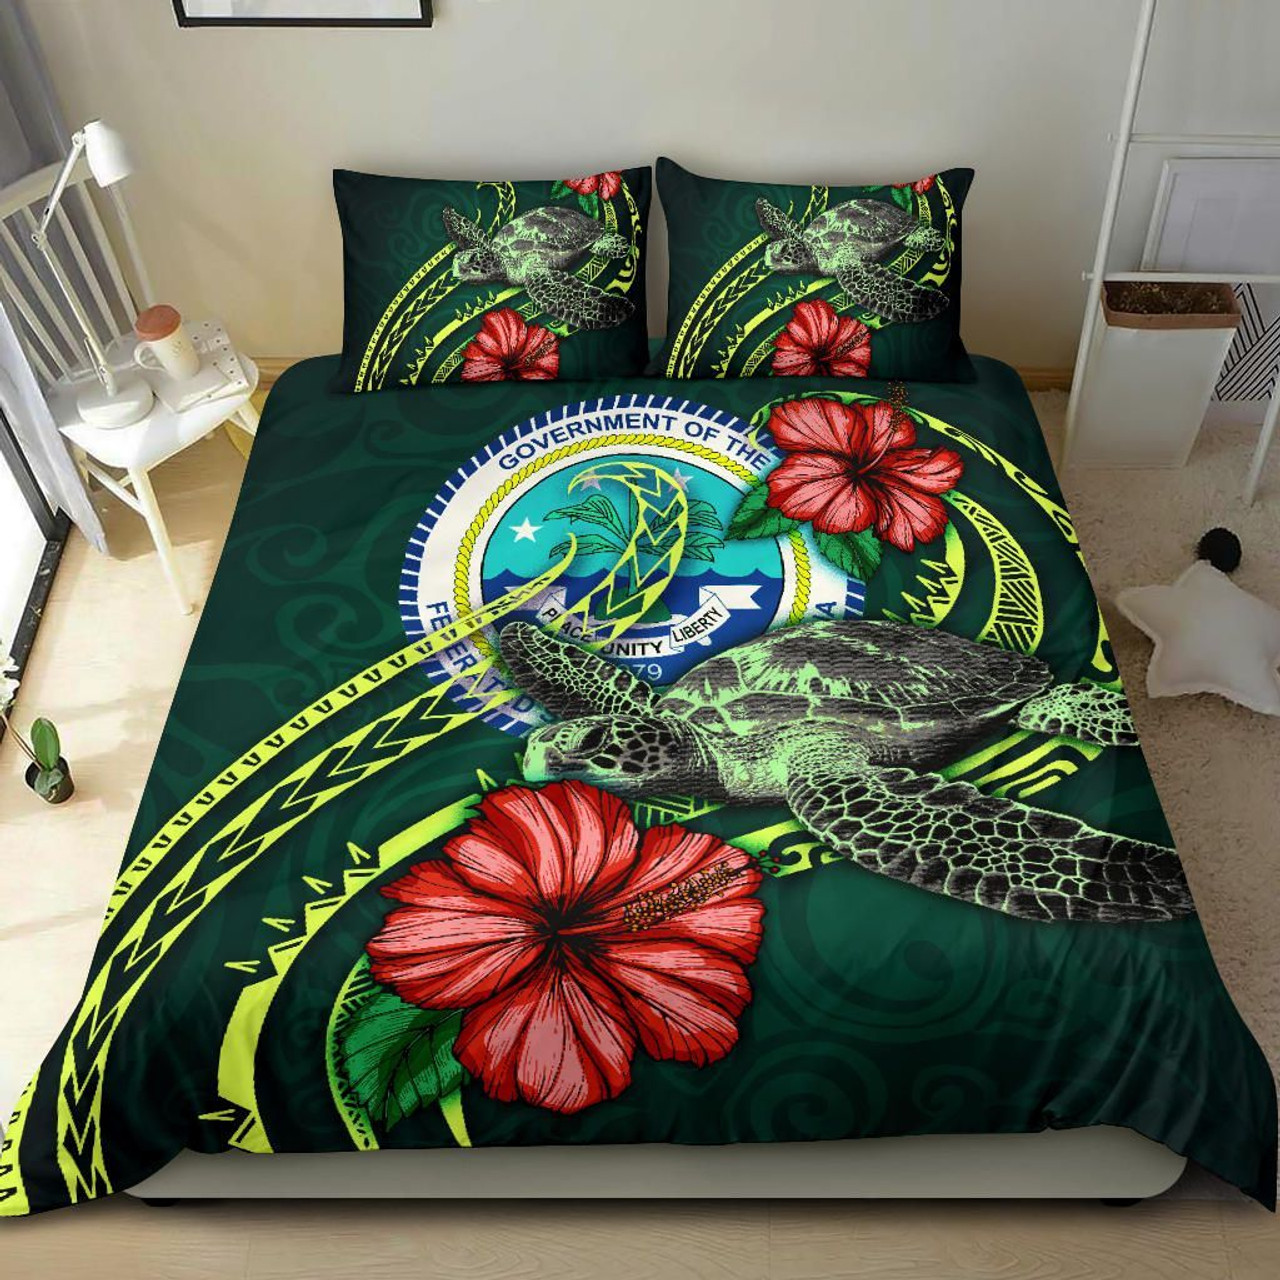 Polynesian Bedding Set - Federated States Of Micronesia Duvet Cover Set Green Turtle Hibiscus 1